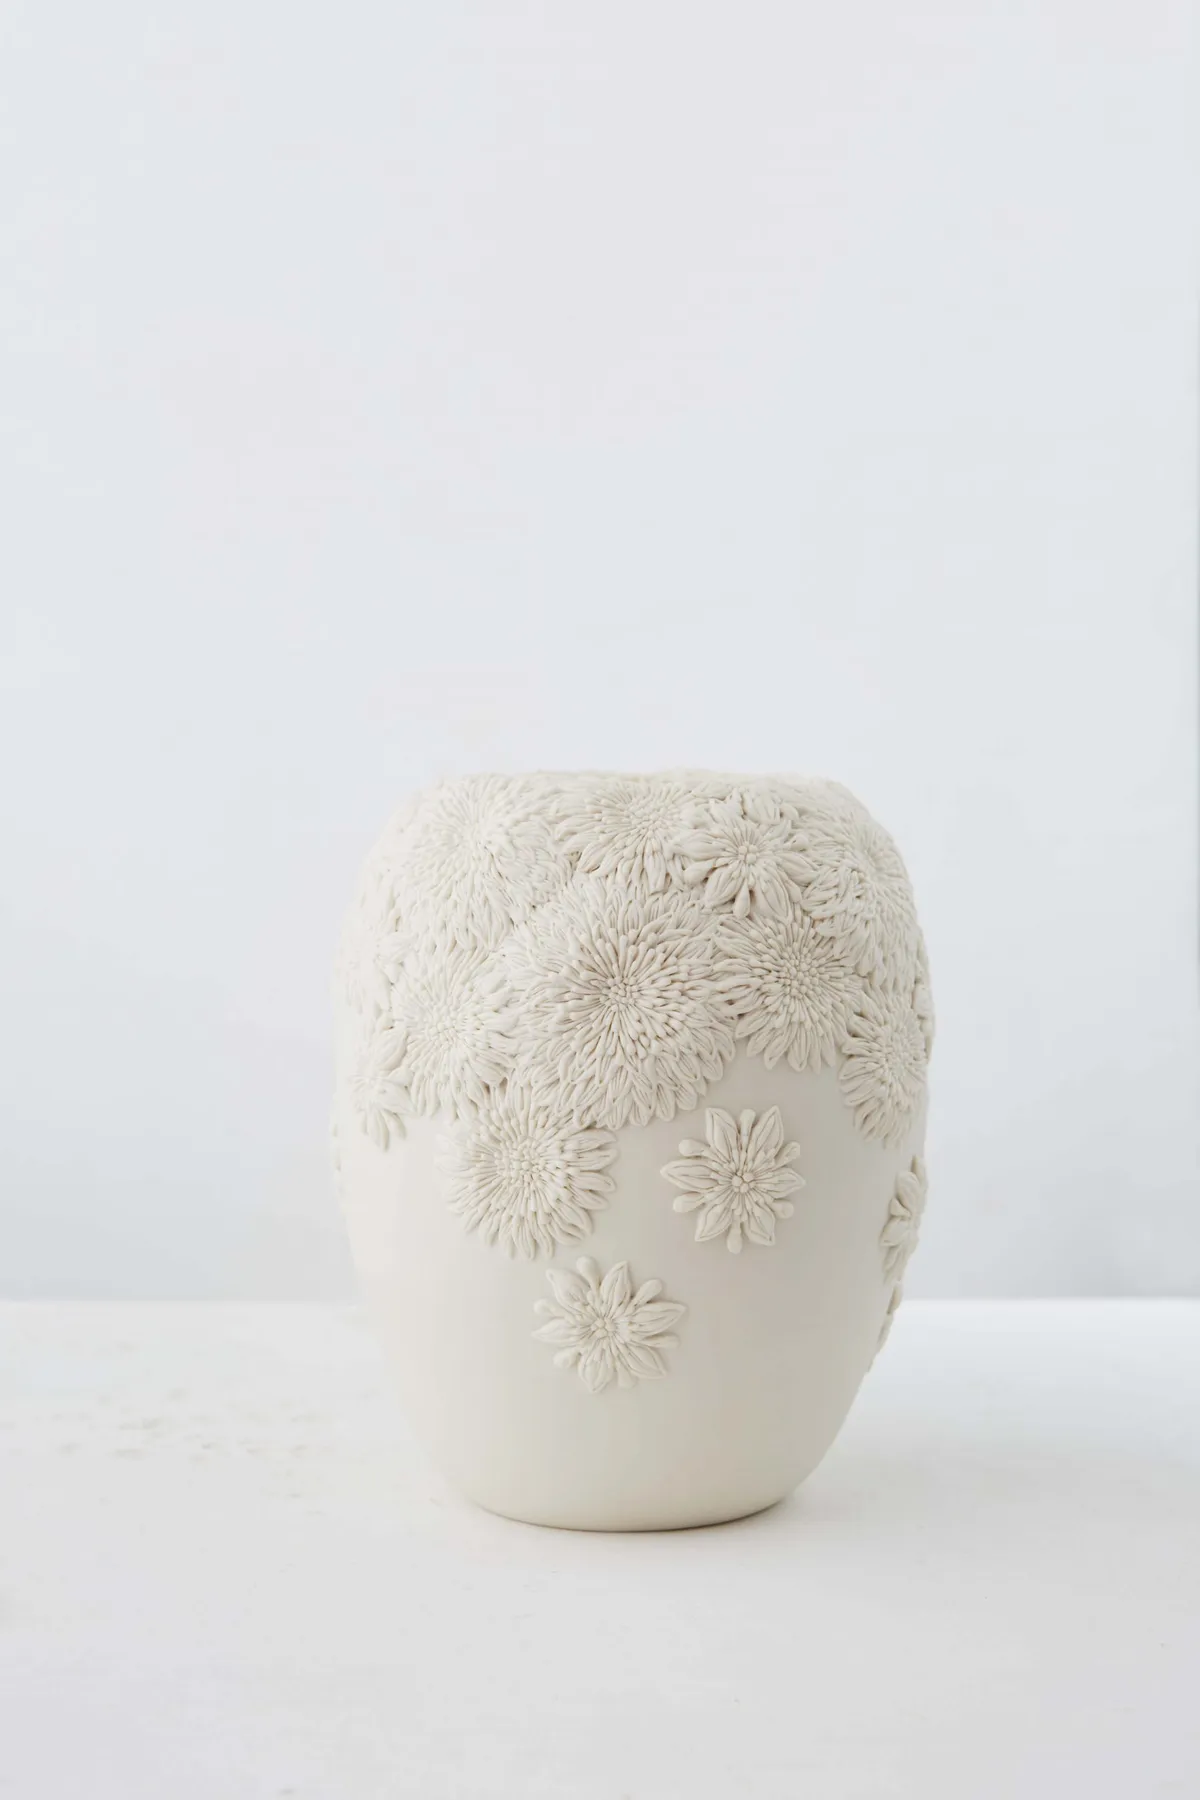 Hitomi Hosono's porcelain